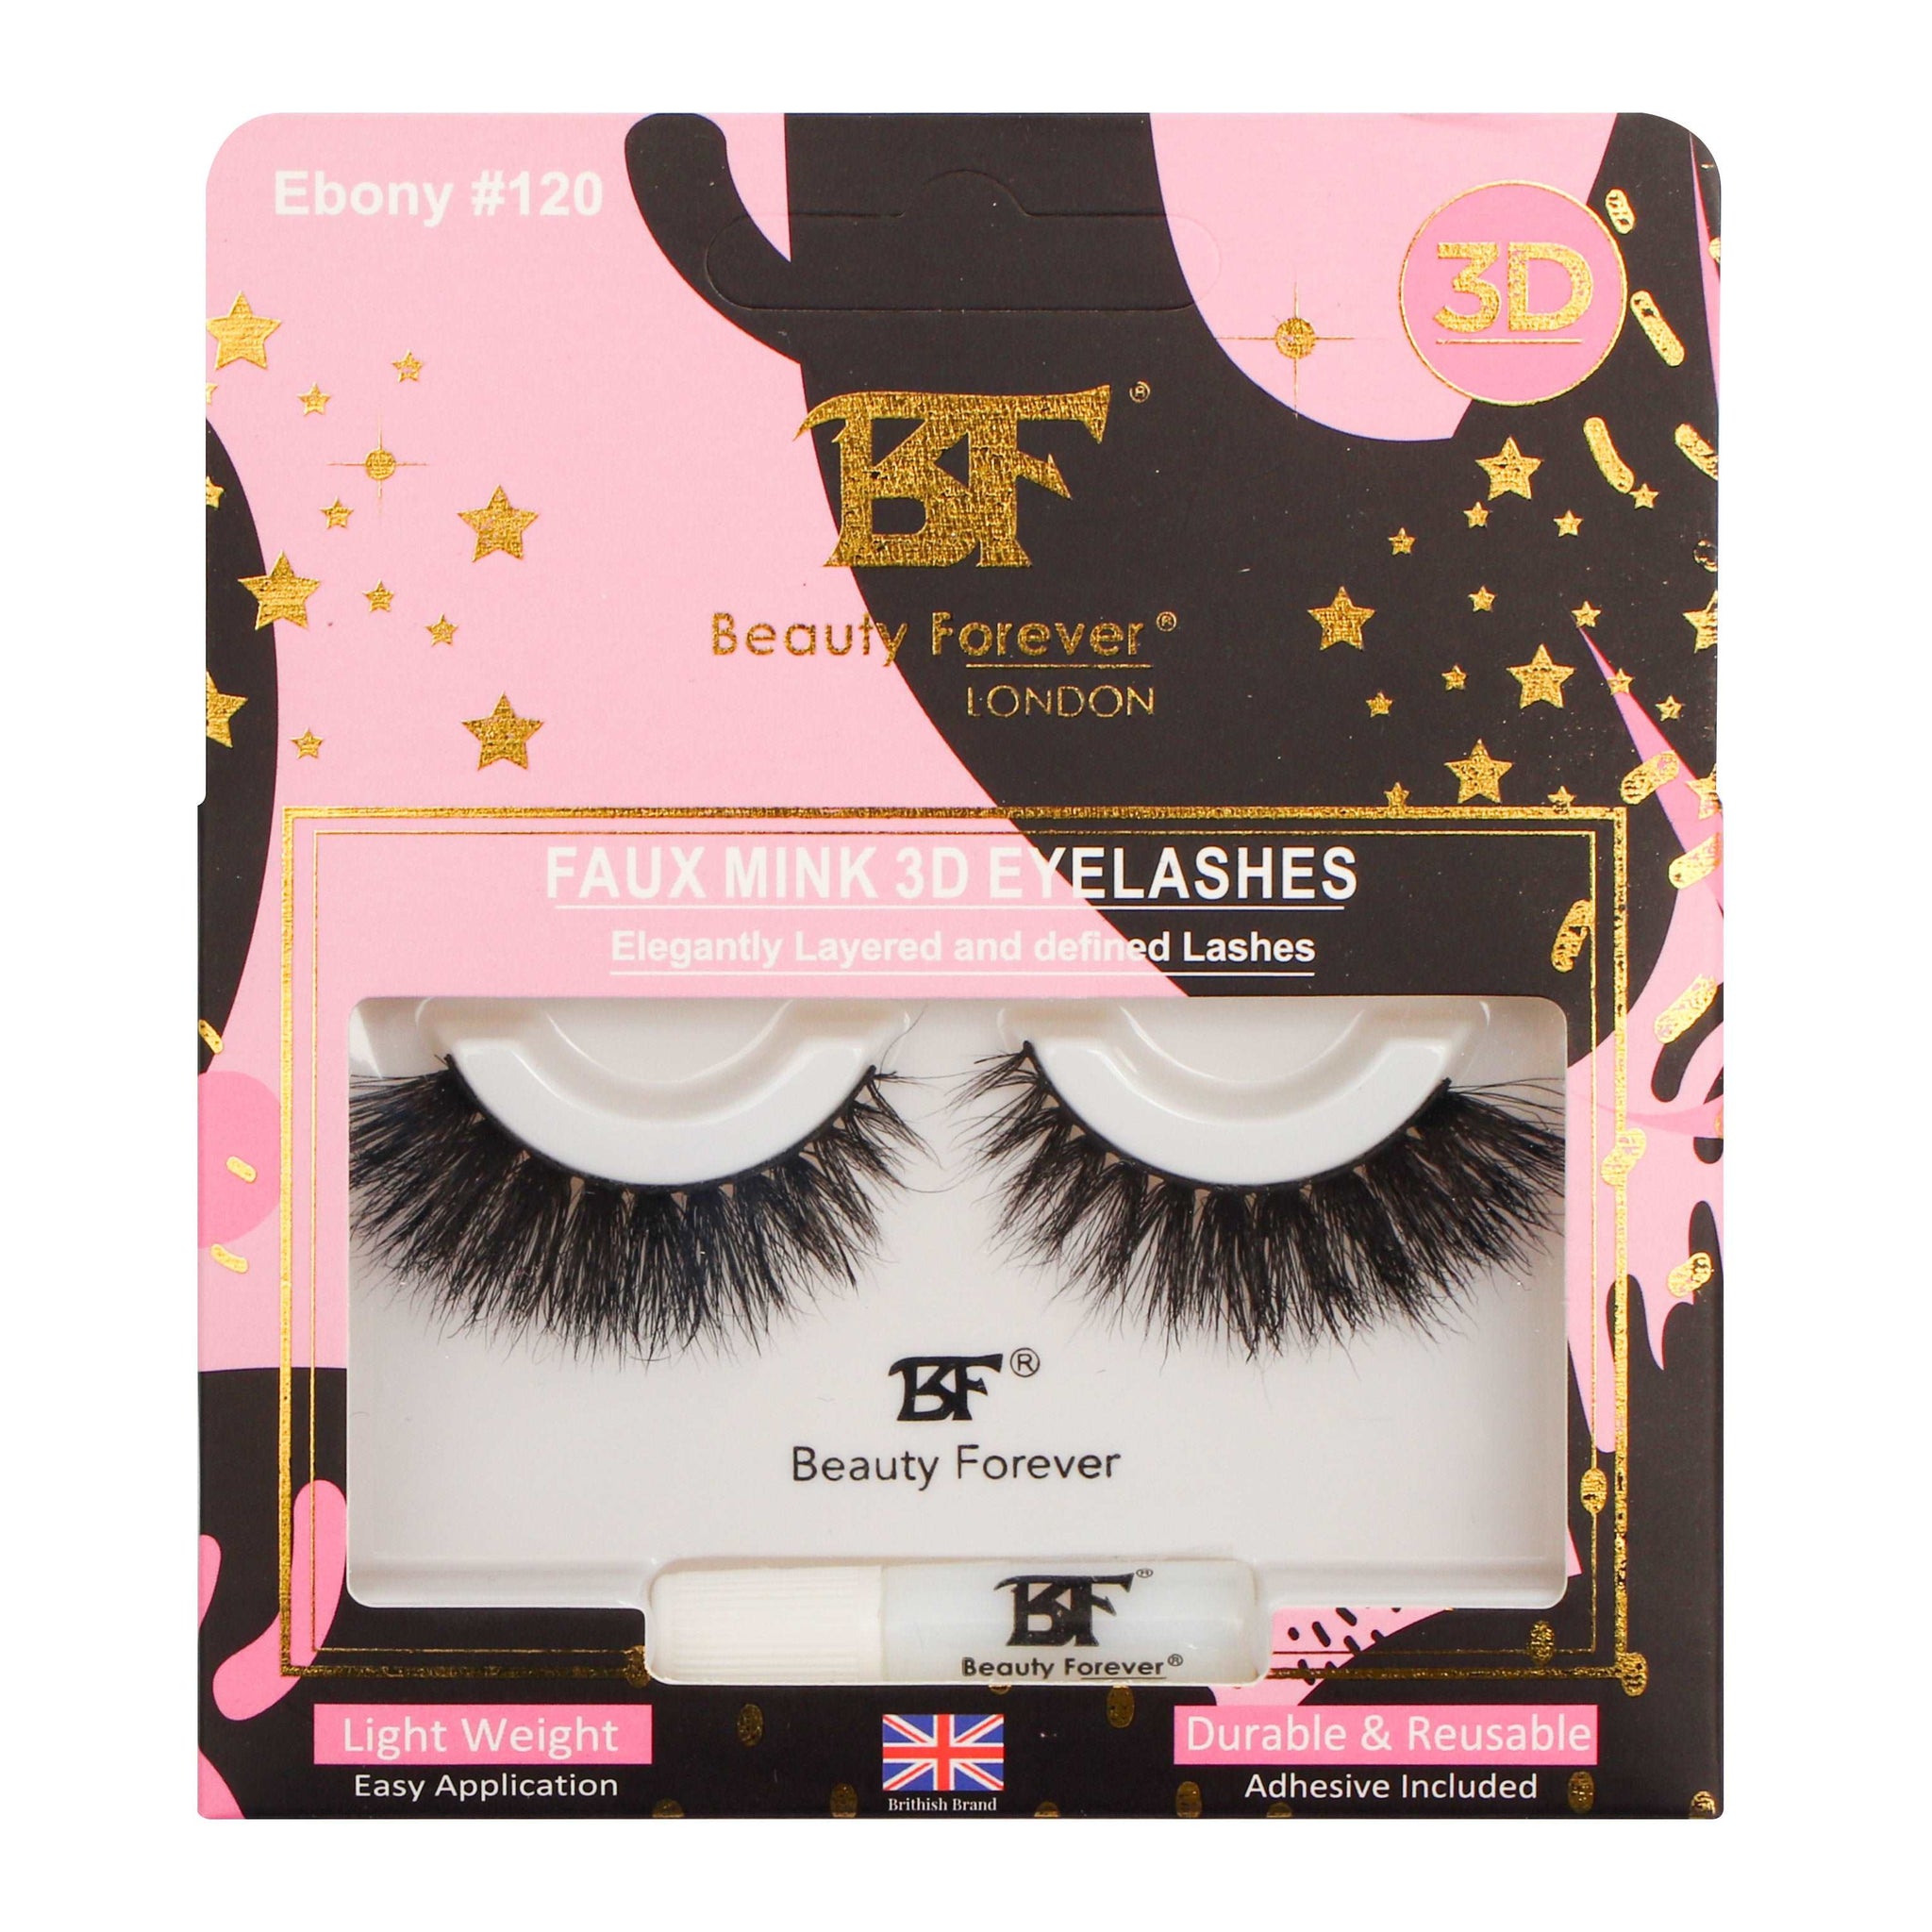 Beauty Forever Faux Mink 3D False Eyelashes in Ebony #120